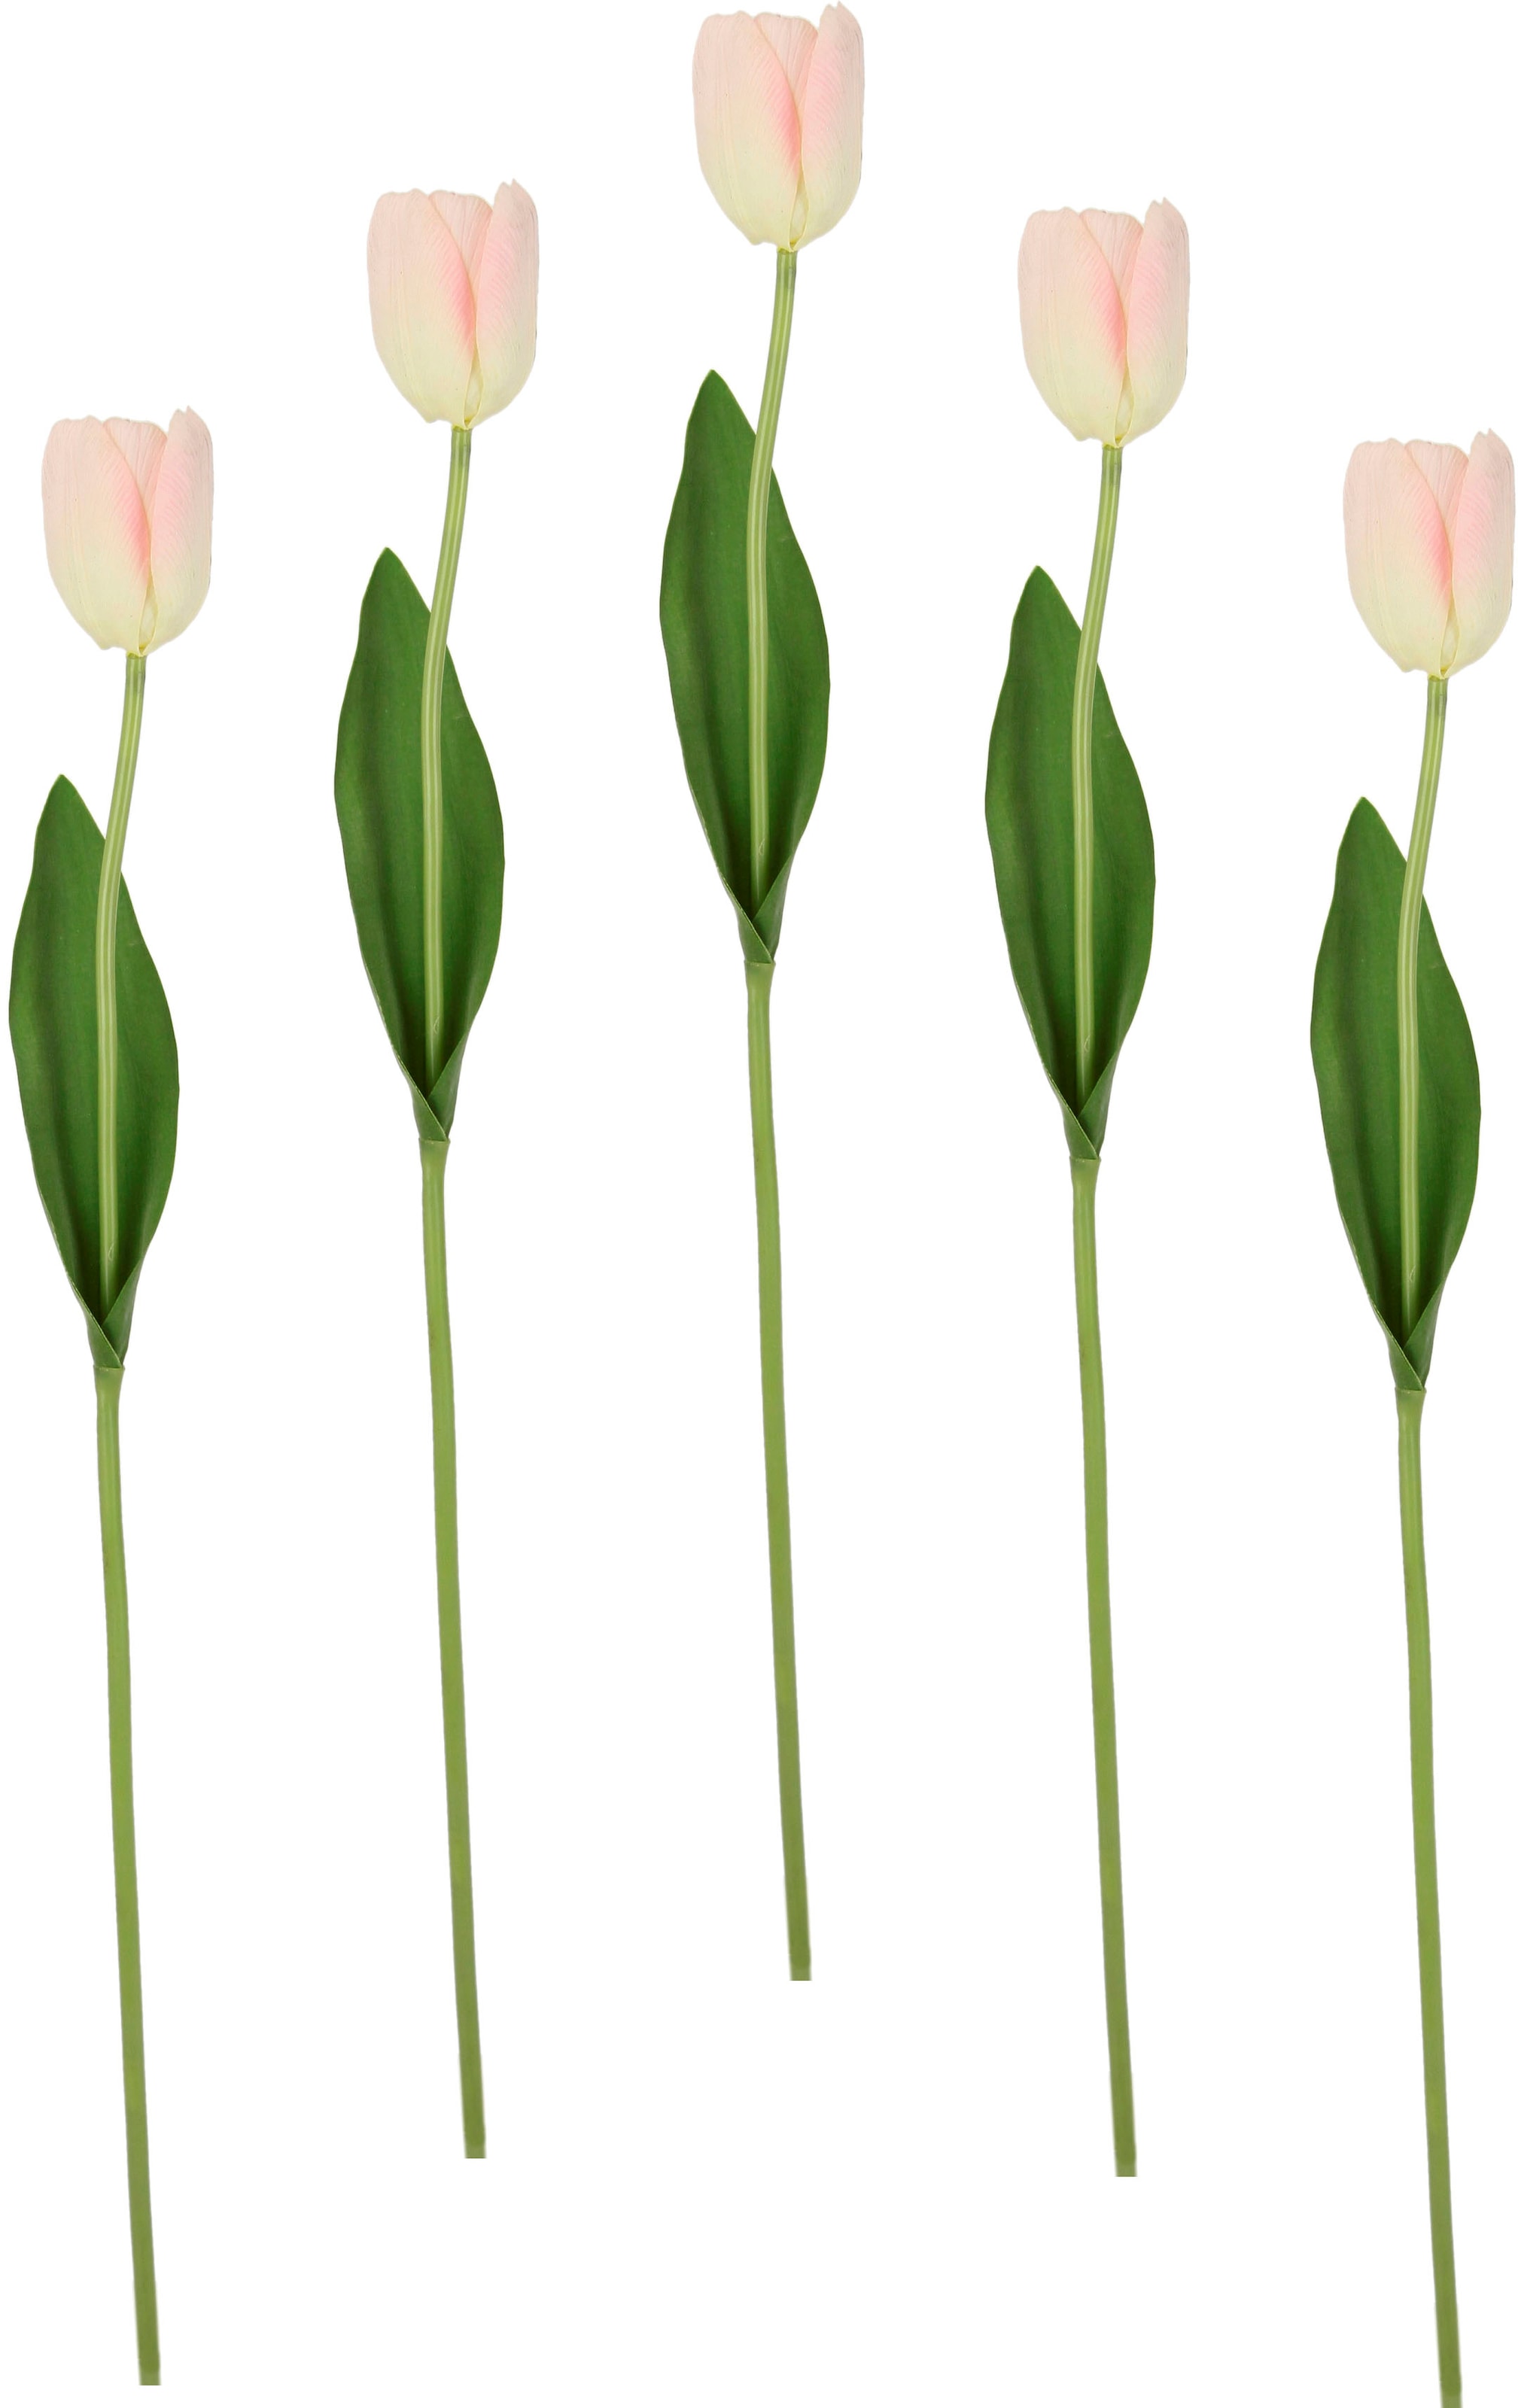 I.GE.A. Kunstblume »Real Stielblume Kunstblumen, jetzt Set Tulpen«, Tulpenknospen, künstliche Touch kaufen 5er